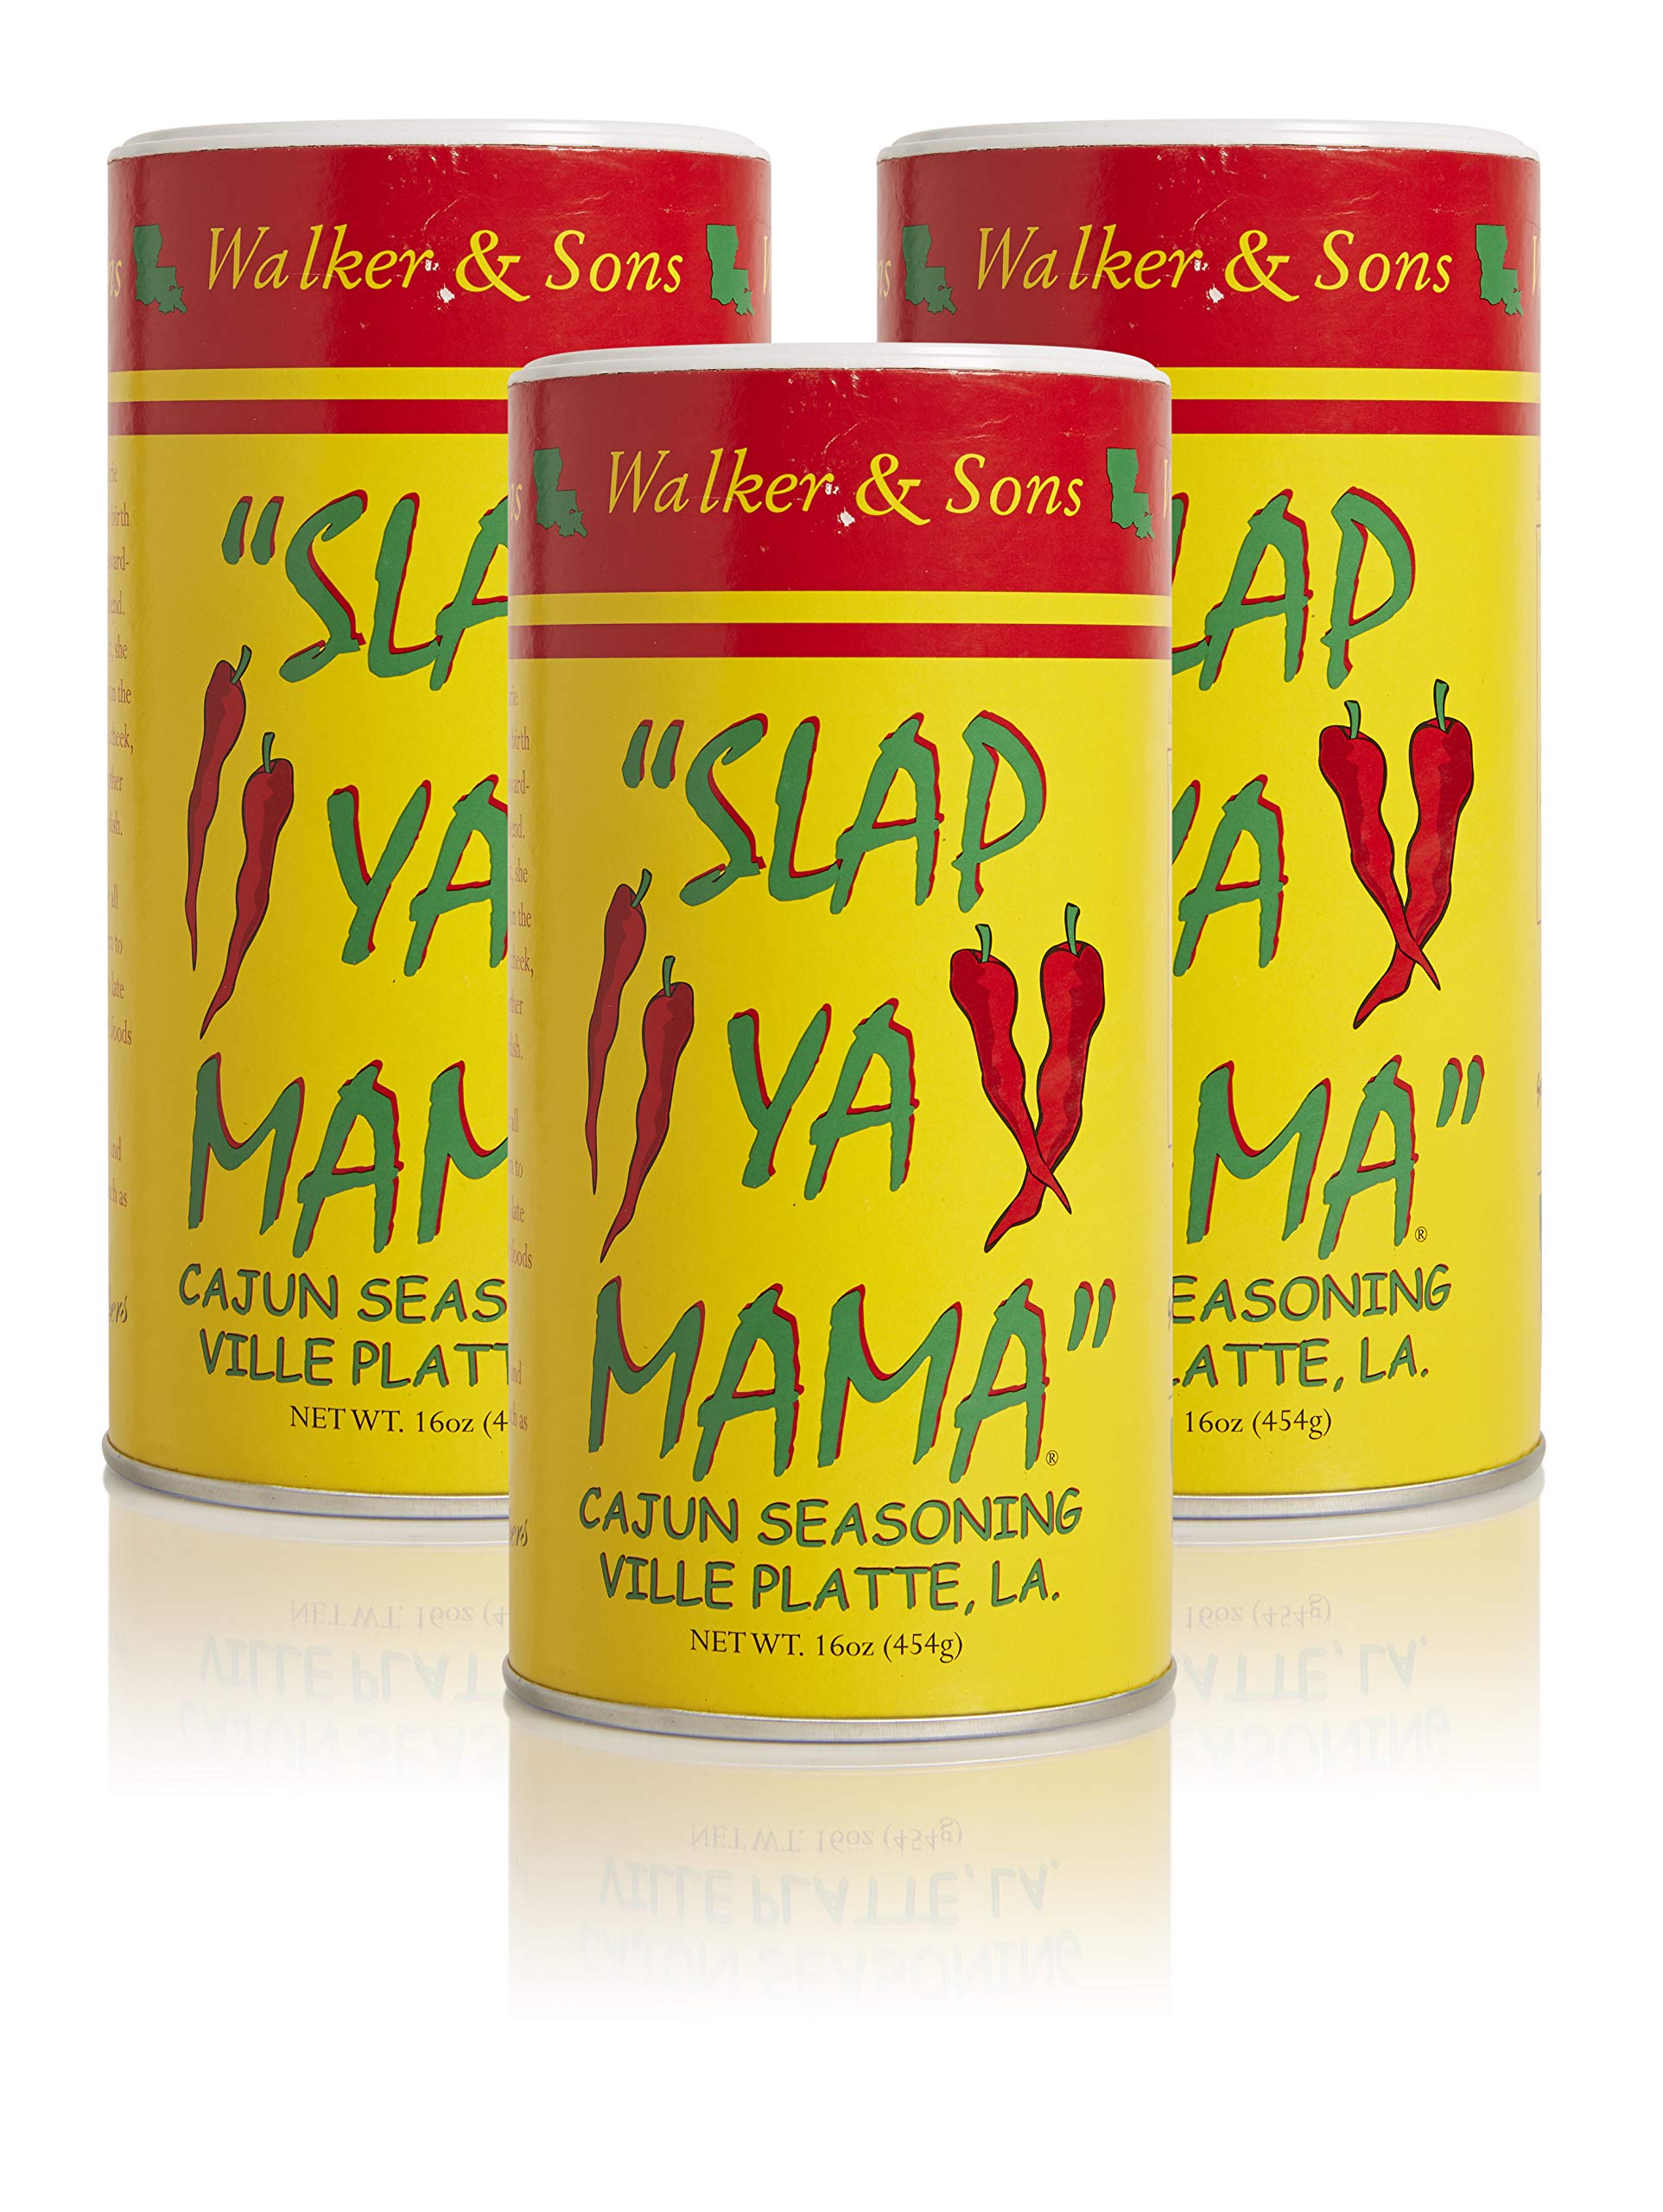 Slap Ya Mama Original Seasoning